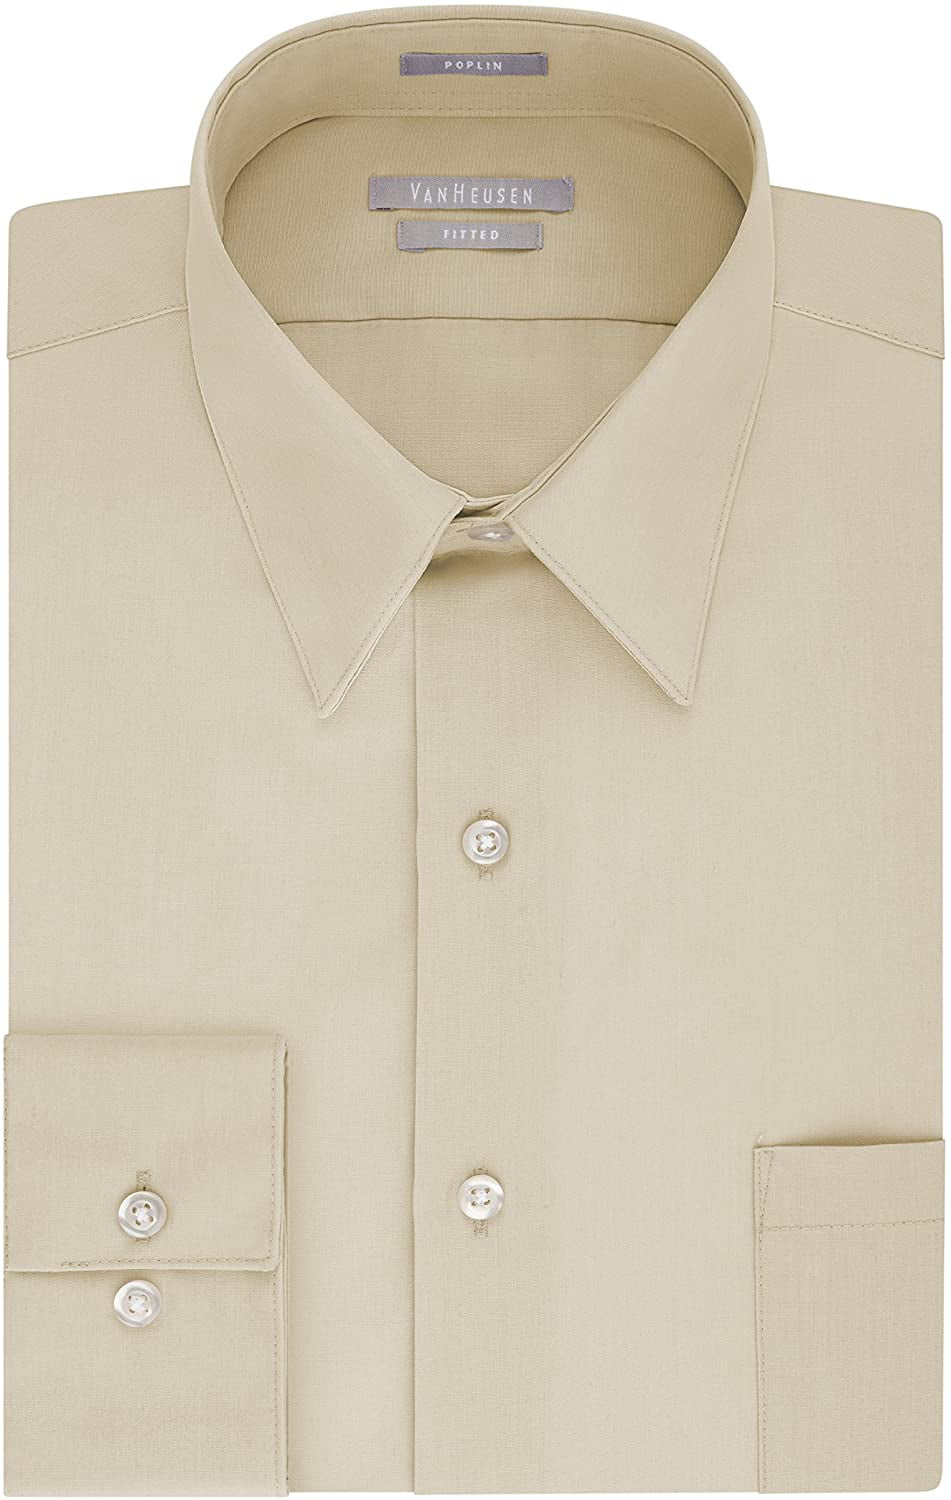 Van Heusen Mens Dress Shirt Fitted Poplin Solid